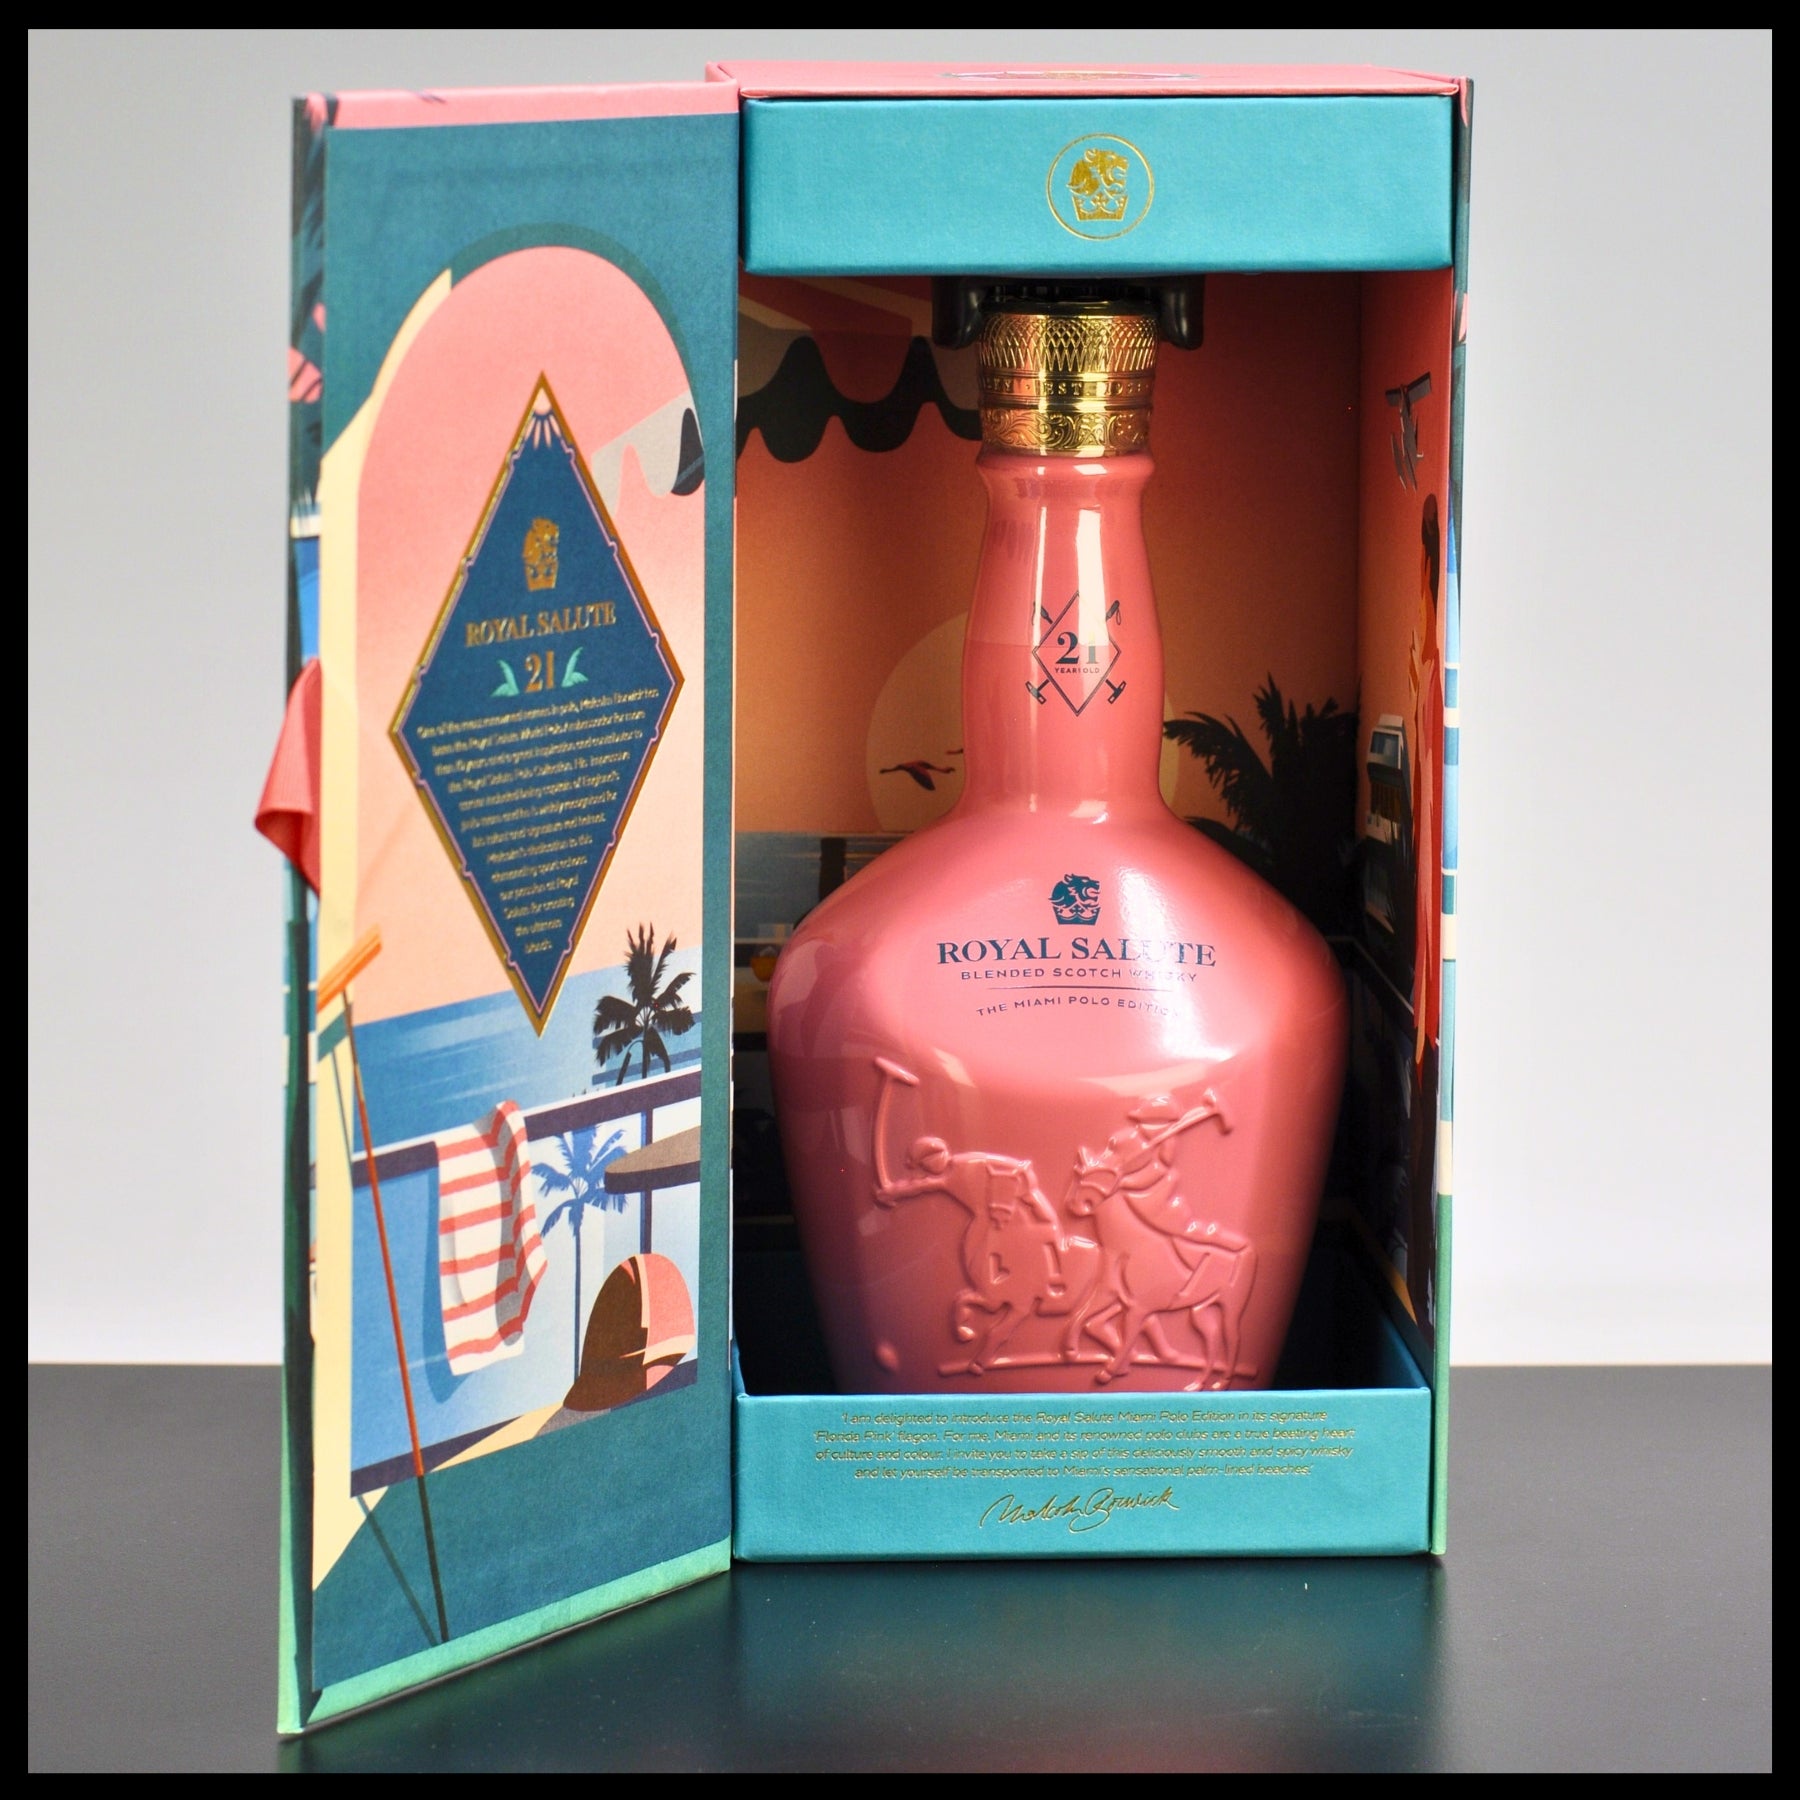 Chivas Regal Royal Salute 21 YO "Miami Polo Edition" Whisky 0,7L - 40% Vol.